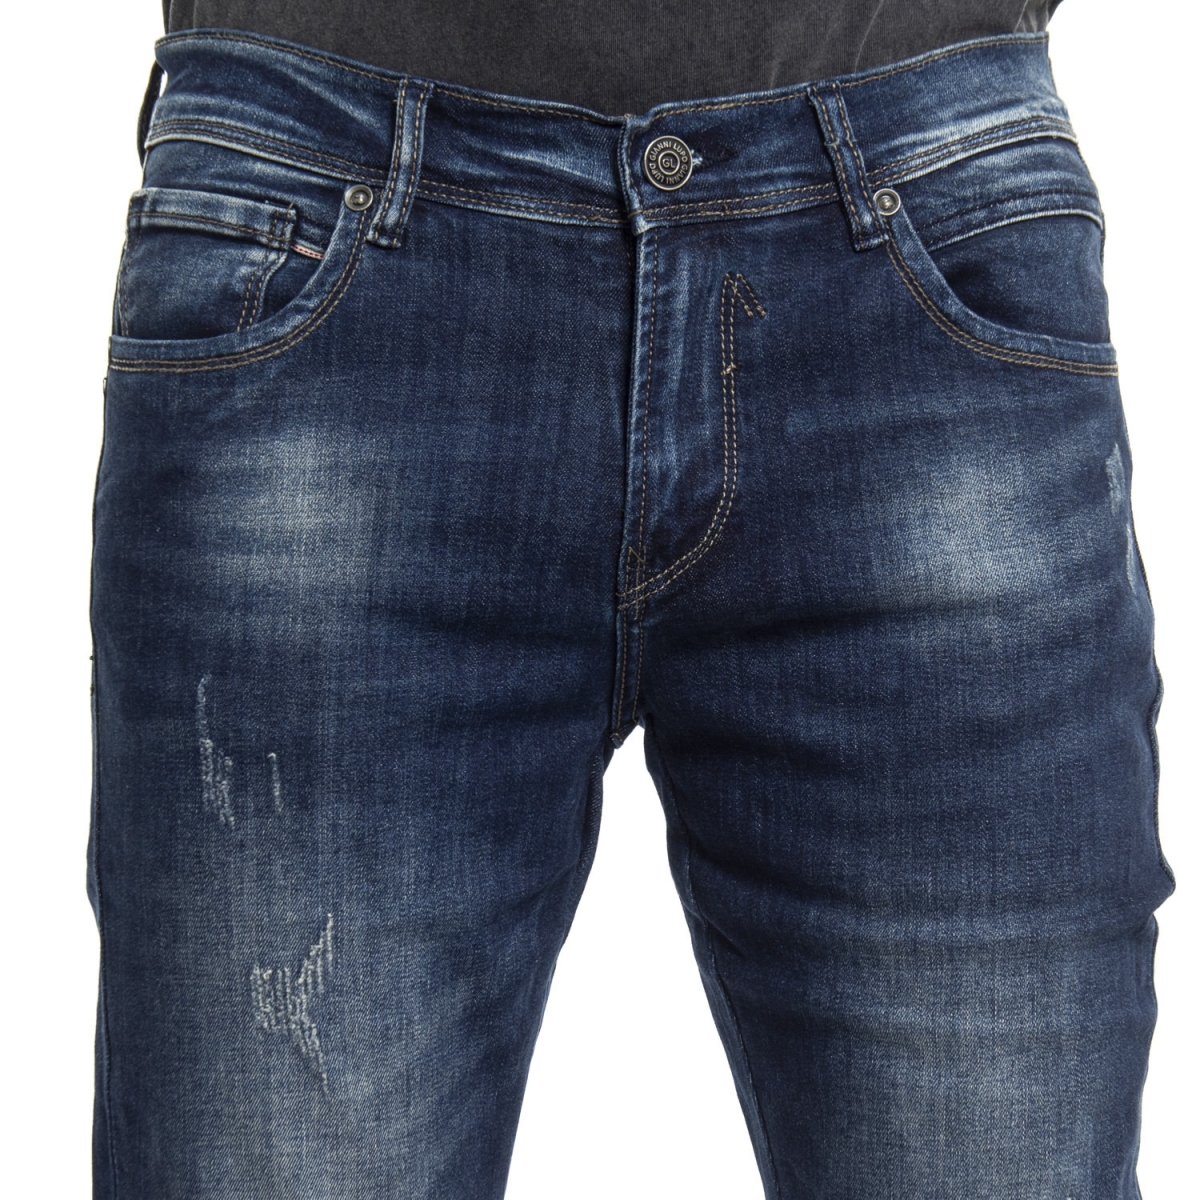 abbigliamento Jeans uomo Jeans GL717Y GIANNI LUPO Cafedelmar Shop